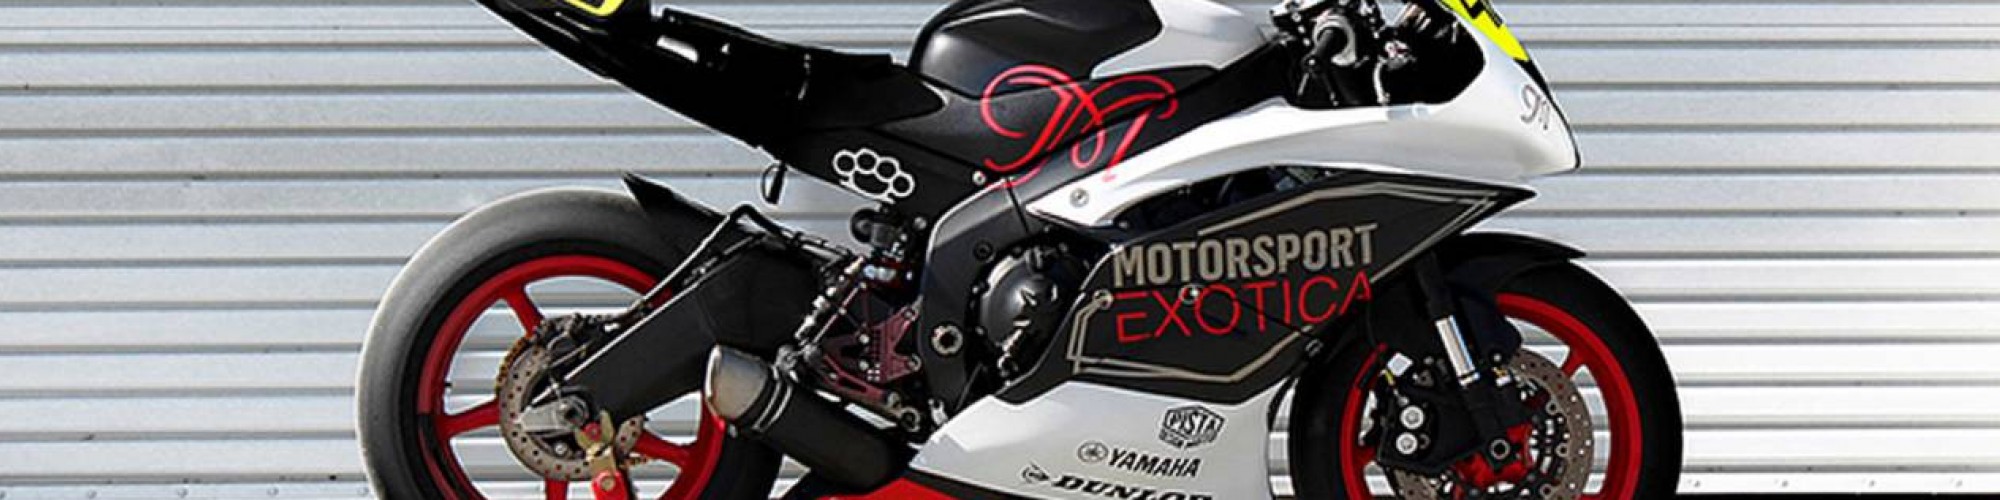 Motorsport Exotica  cover image